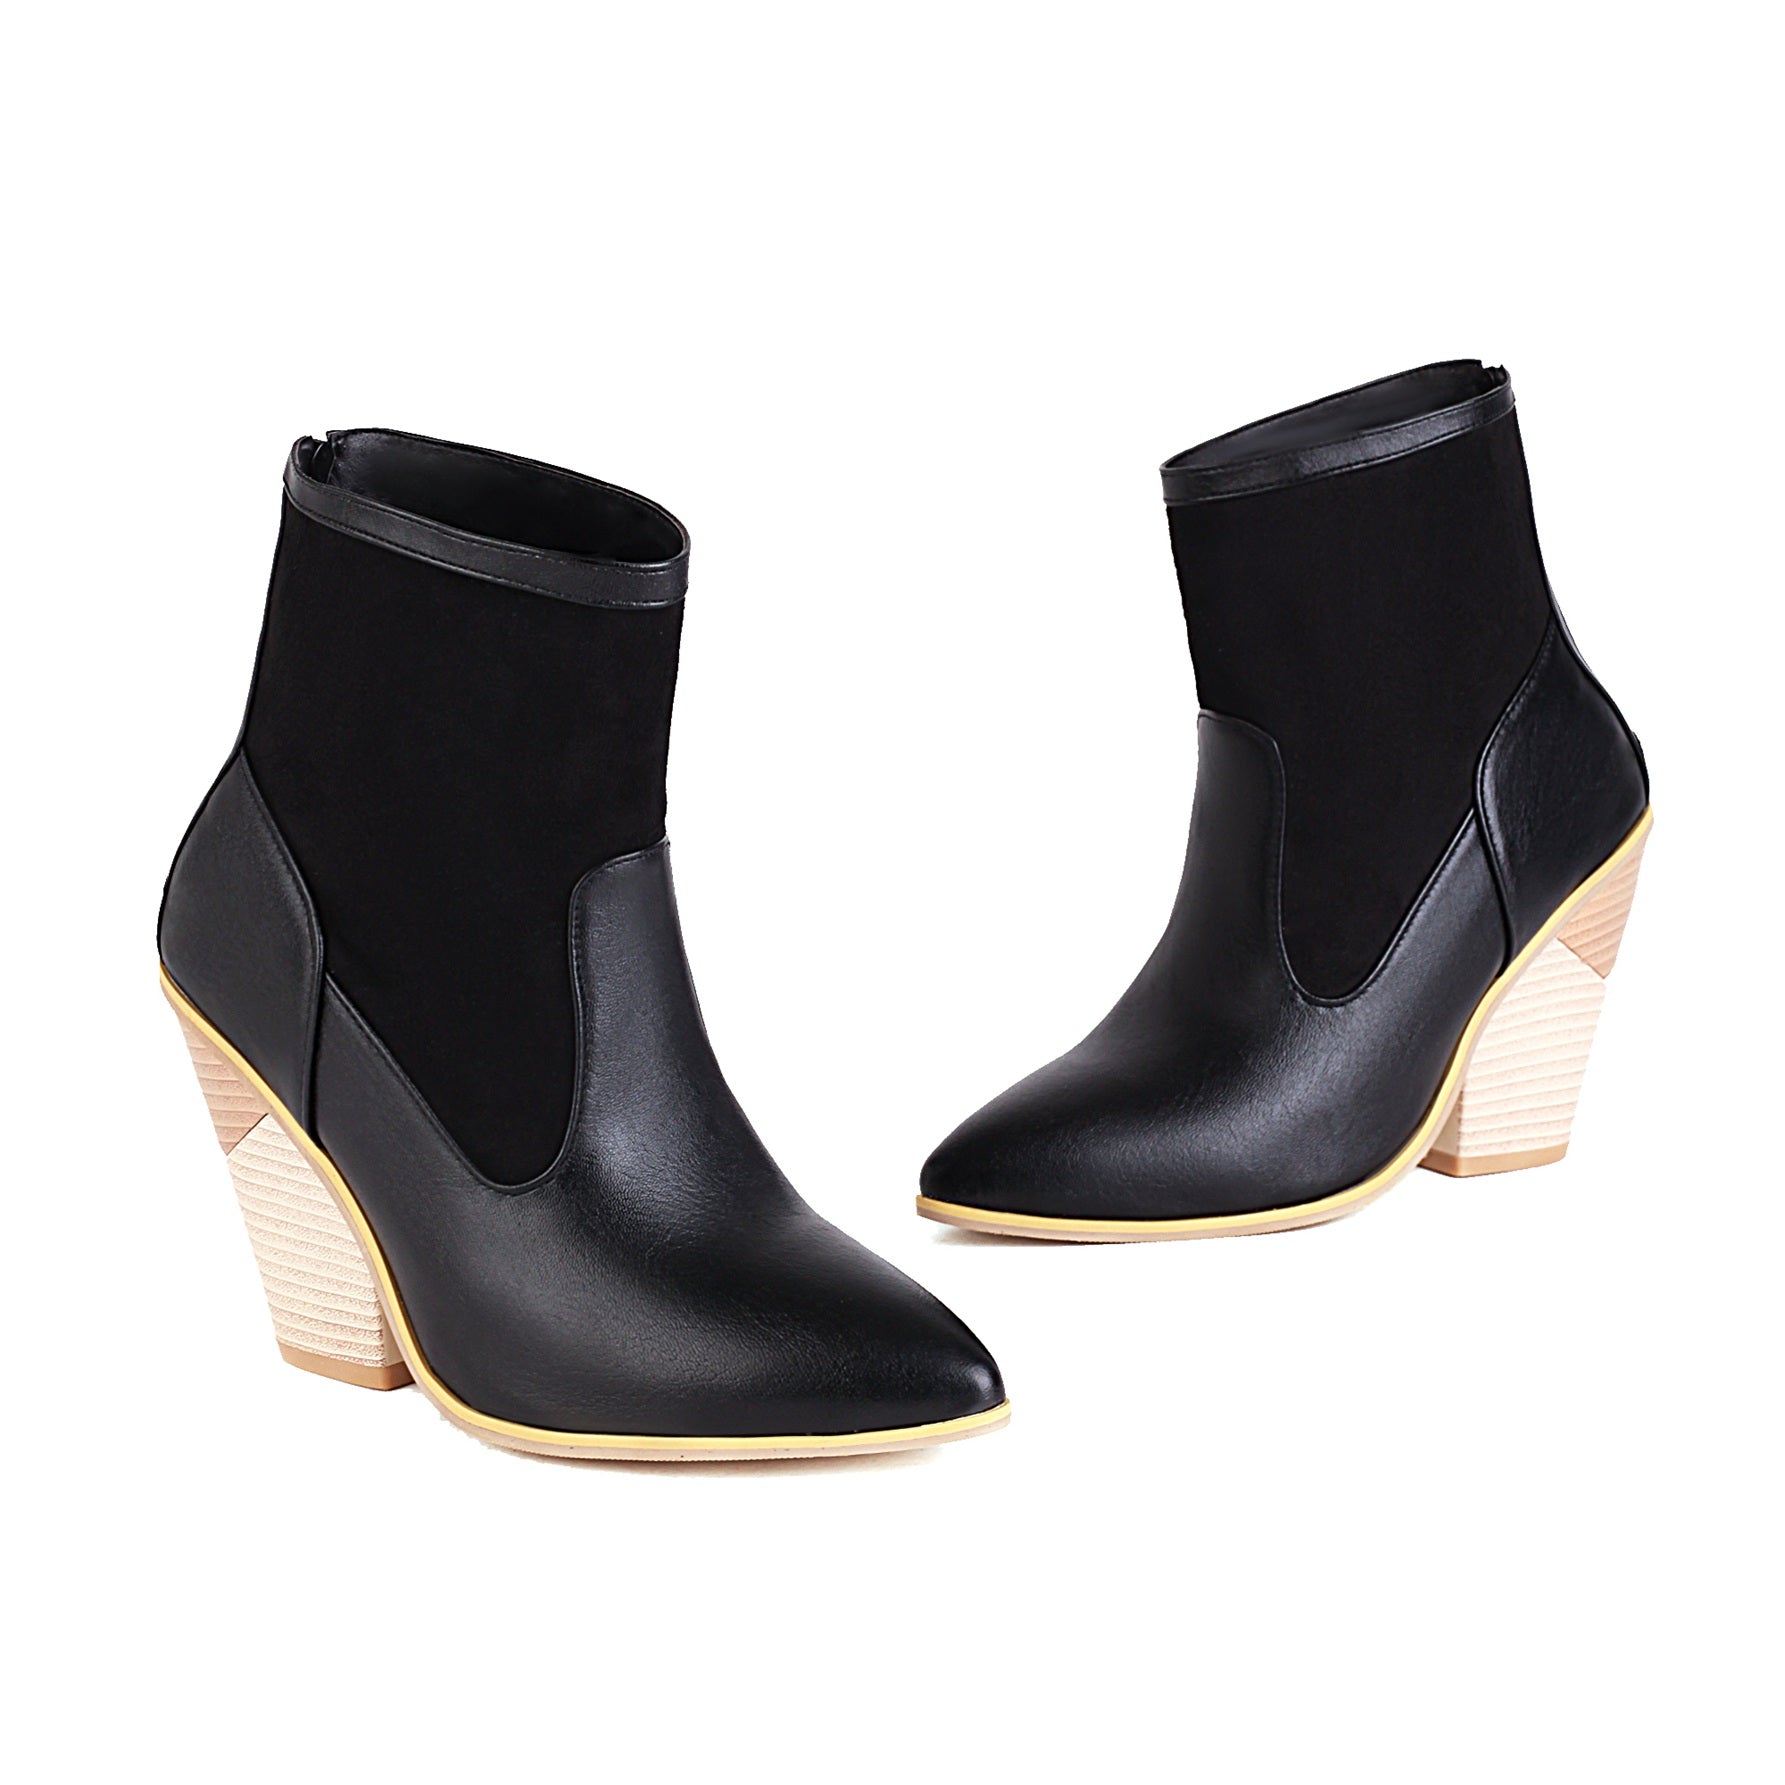 Bigsizeheels American street boots - Black freeshipping - bigsizeheel®-size5-size15 -All Plus Sizes Available!